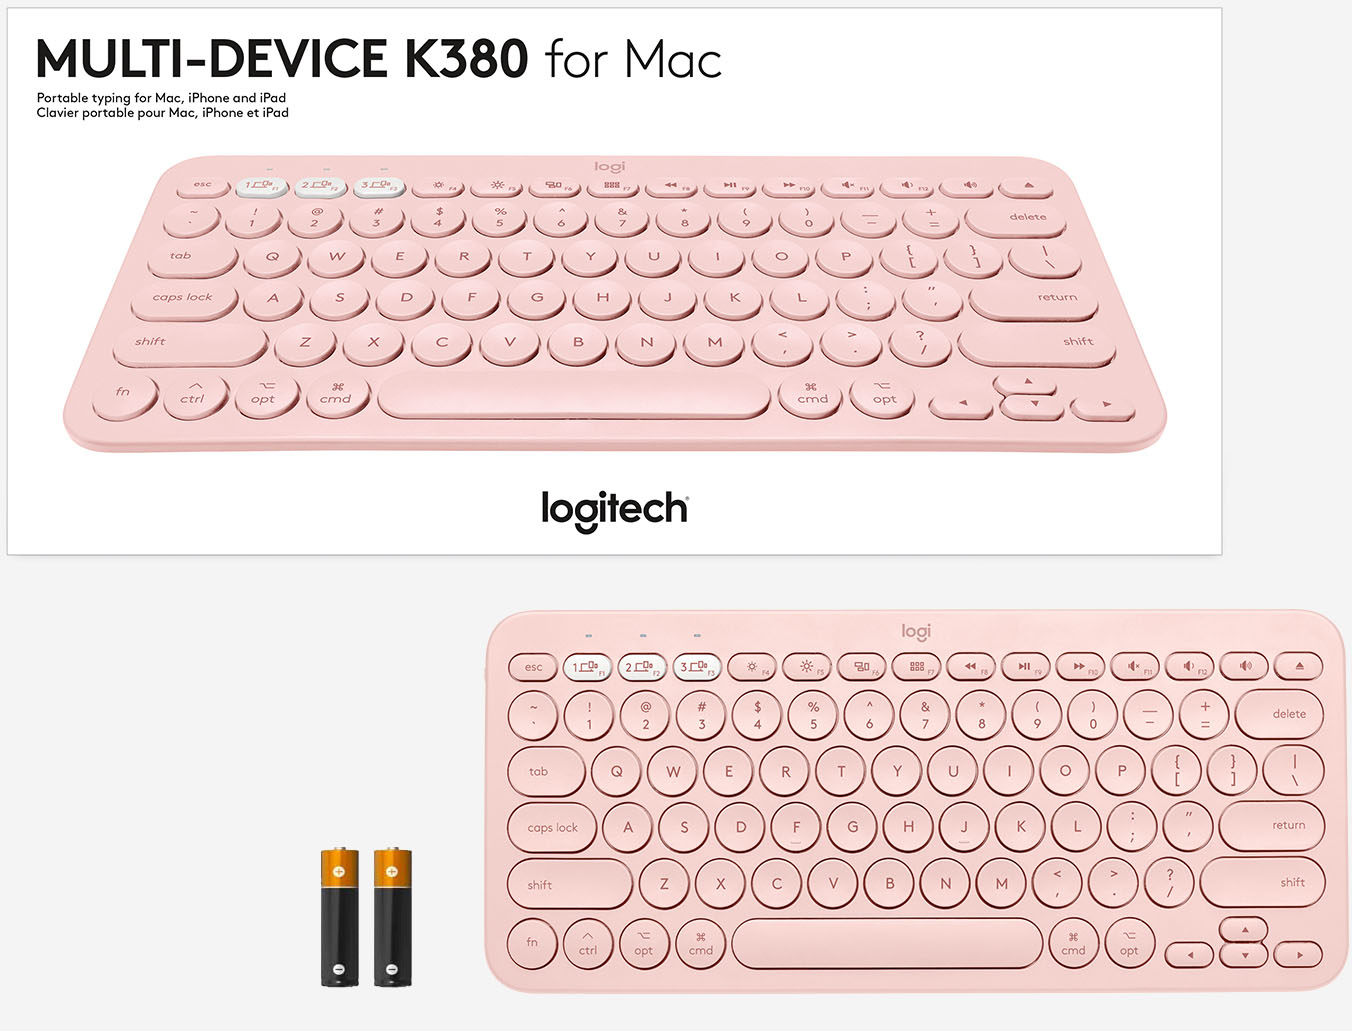 Mac Keyboard K380 Scissor Slim Rose Logitech Buy: 920-009728 Profile Compact Best with Bluetooth for TKL